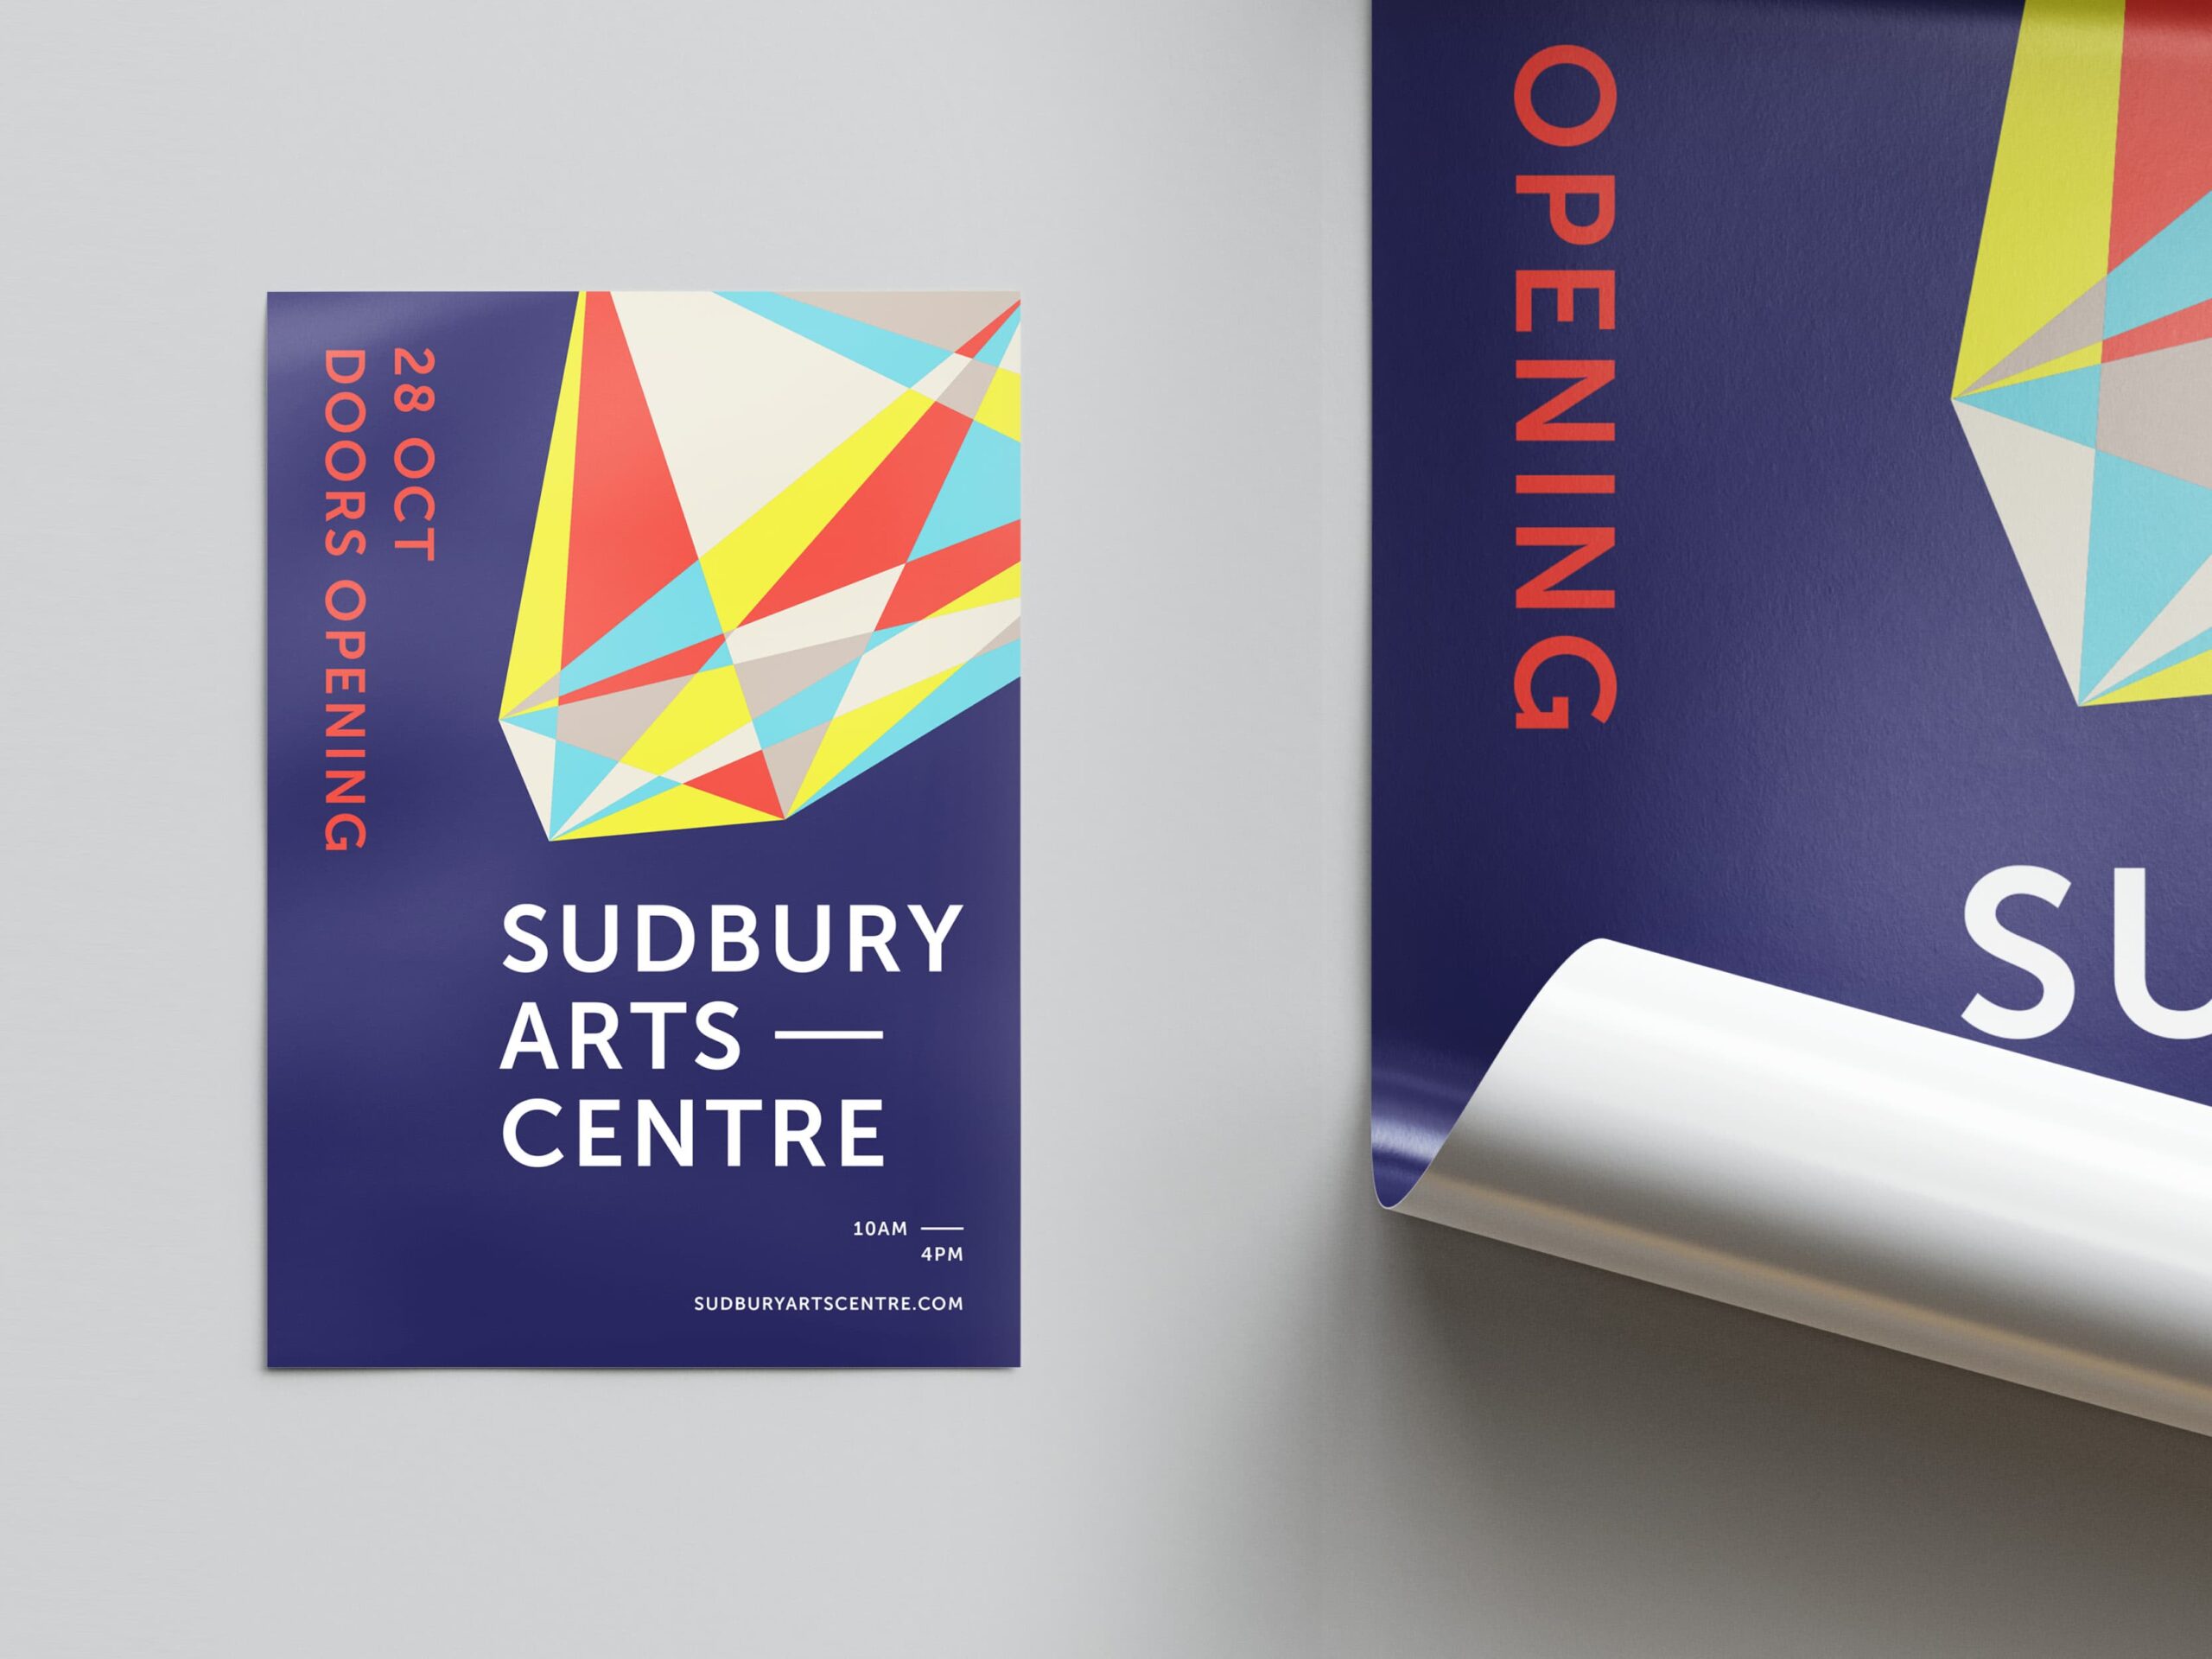 Sudbury Arts Centre opening event poster design